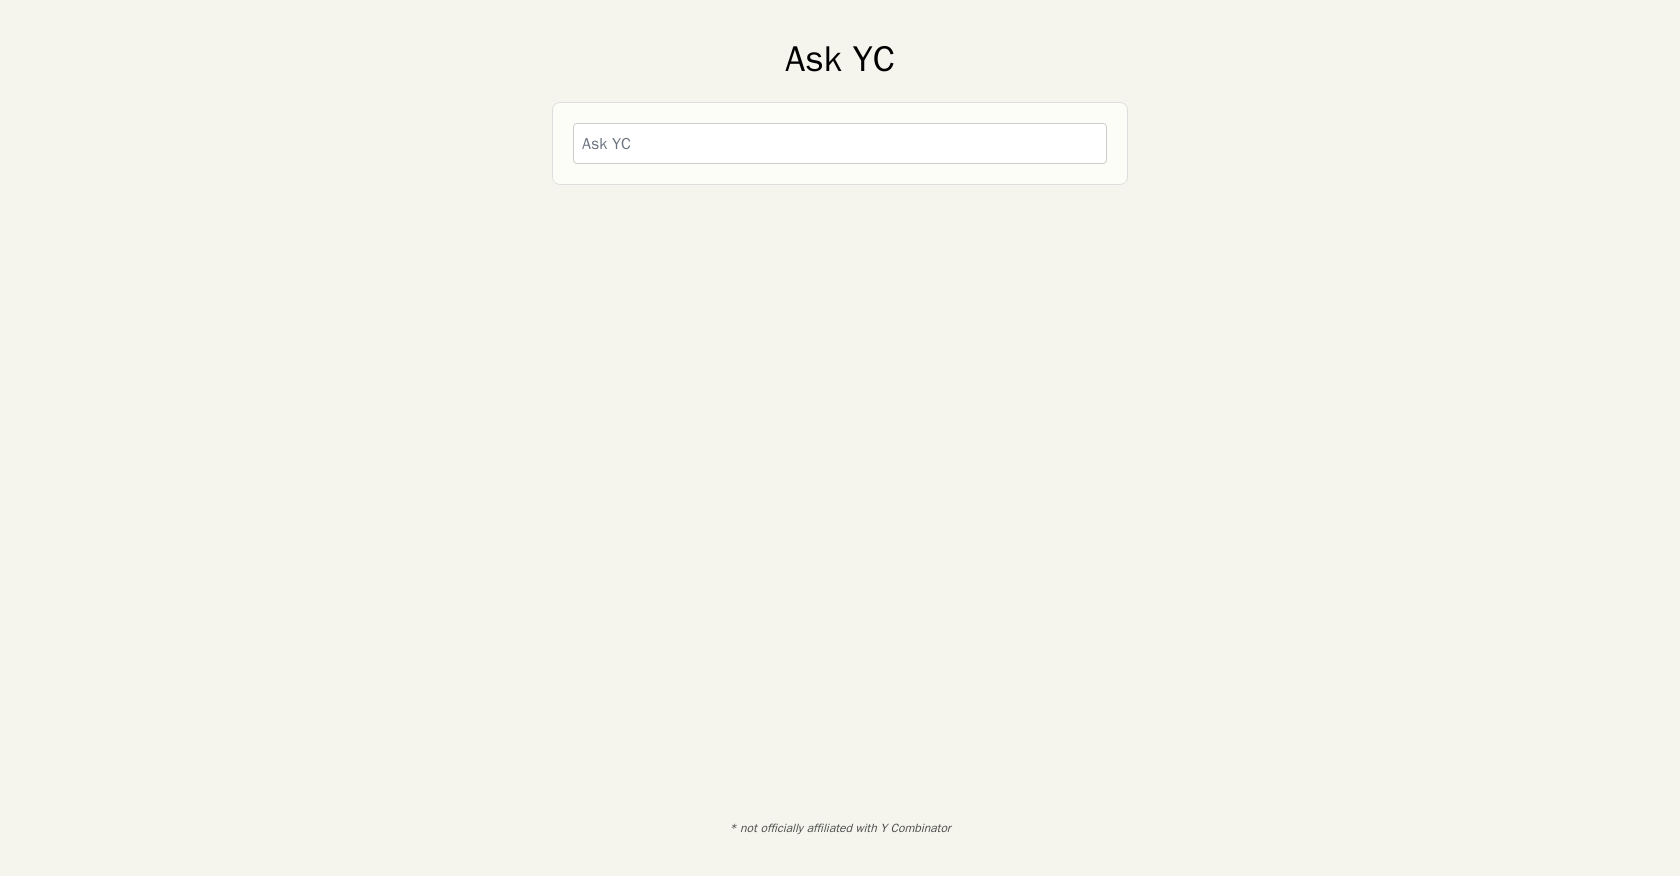 Ask YC